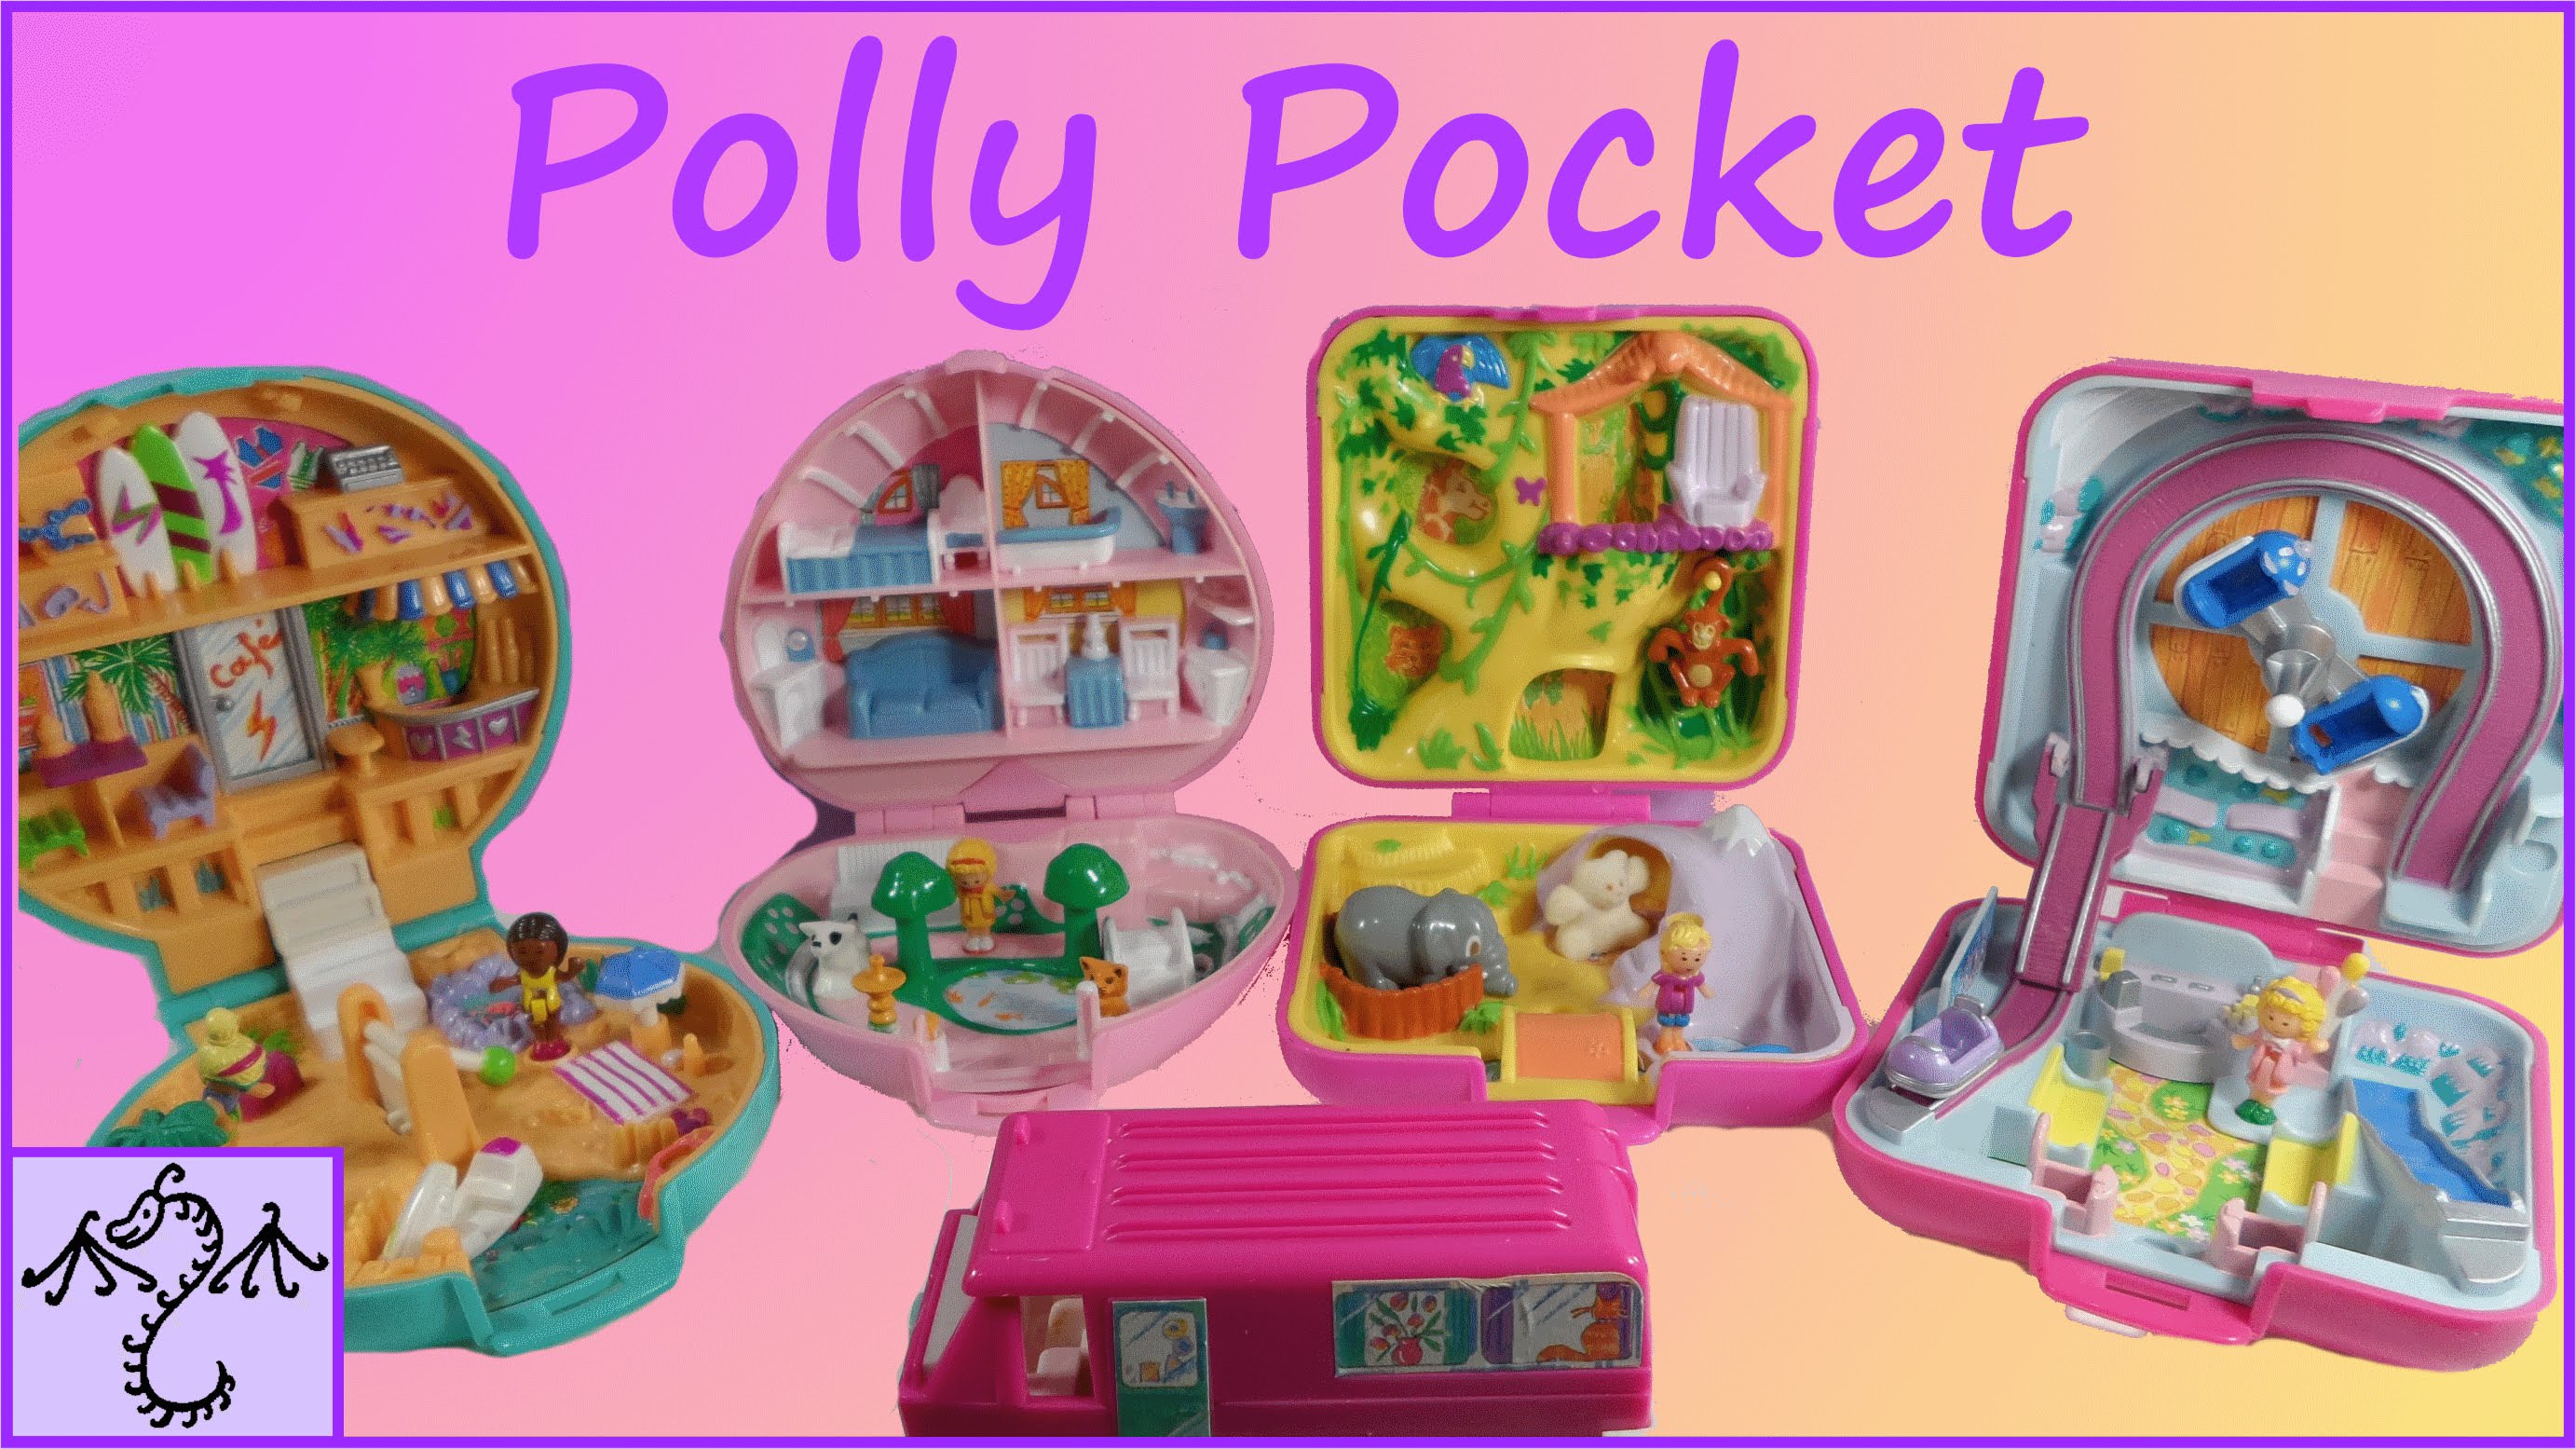 polly pocket 1989 - Polly Pocket